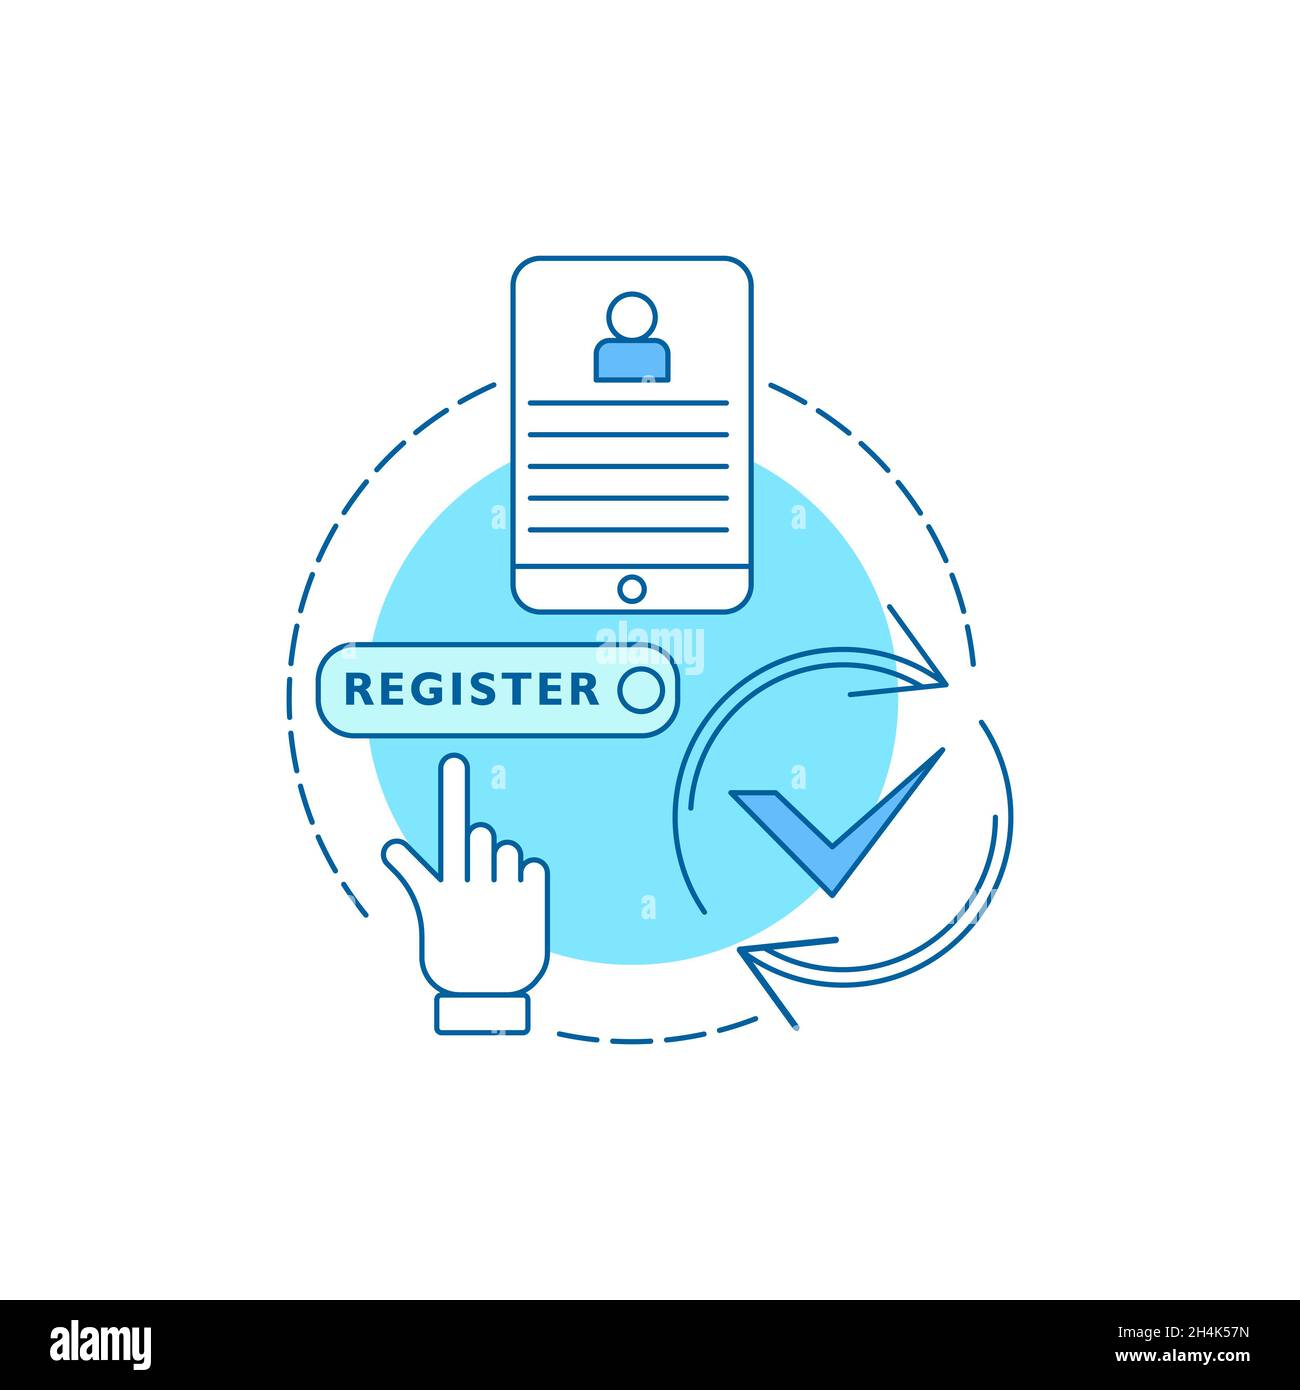 Account login line icon. New user register. Registration concept illustration Stock Photo